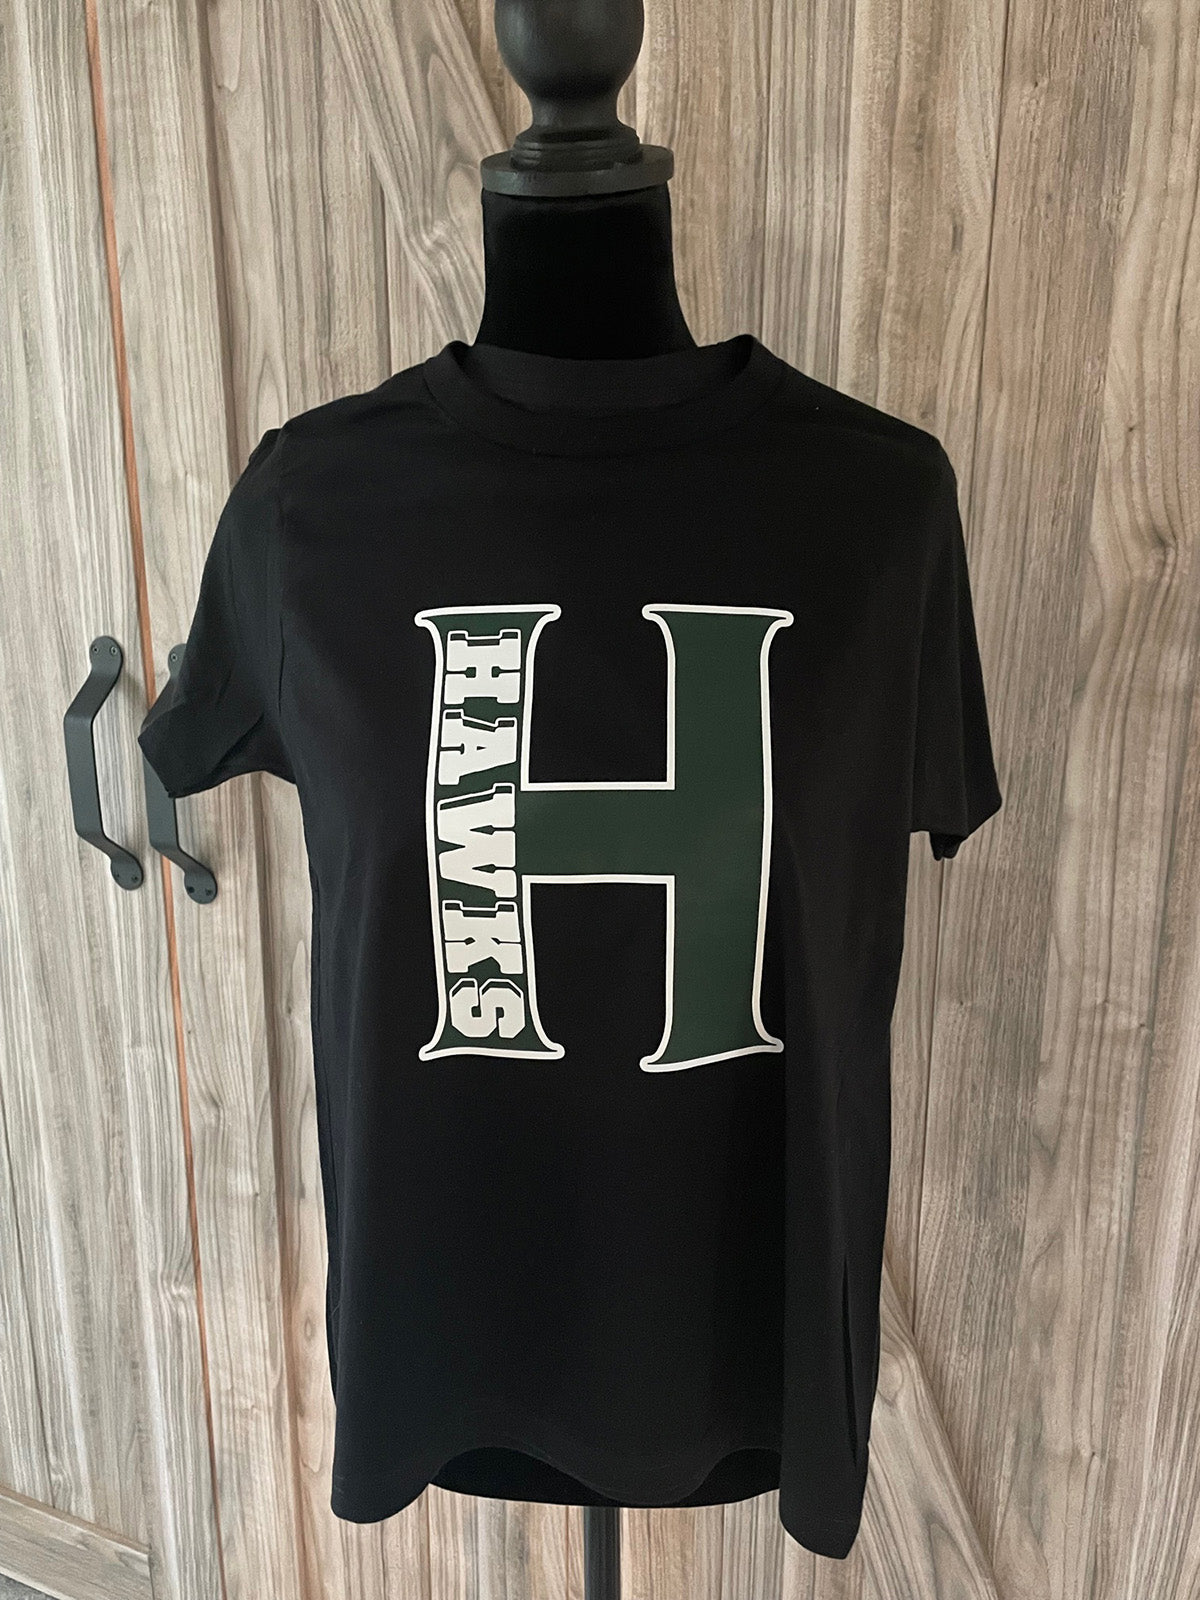 Hilltop design 5 T-Shirt, sale